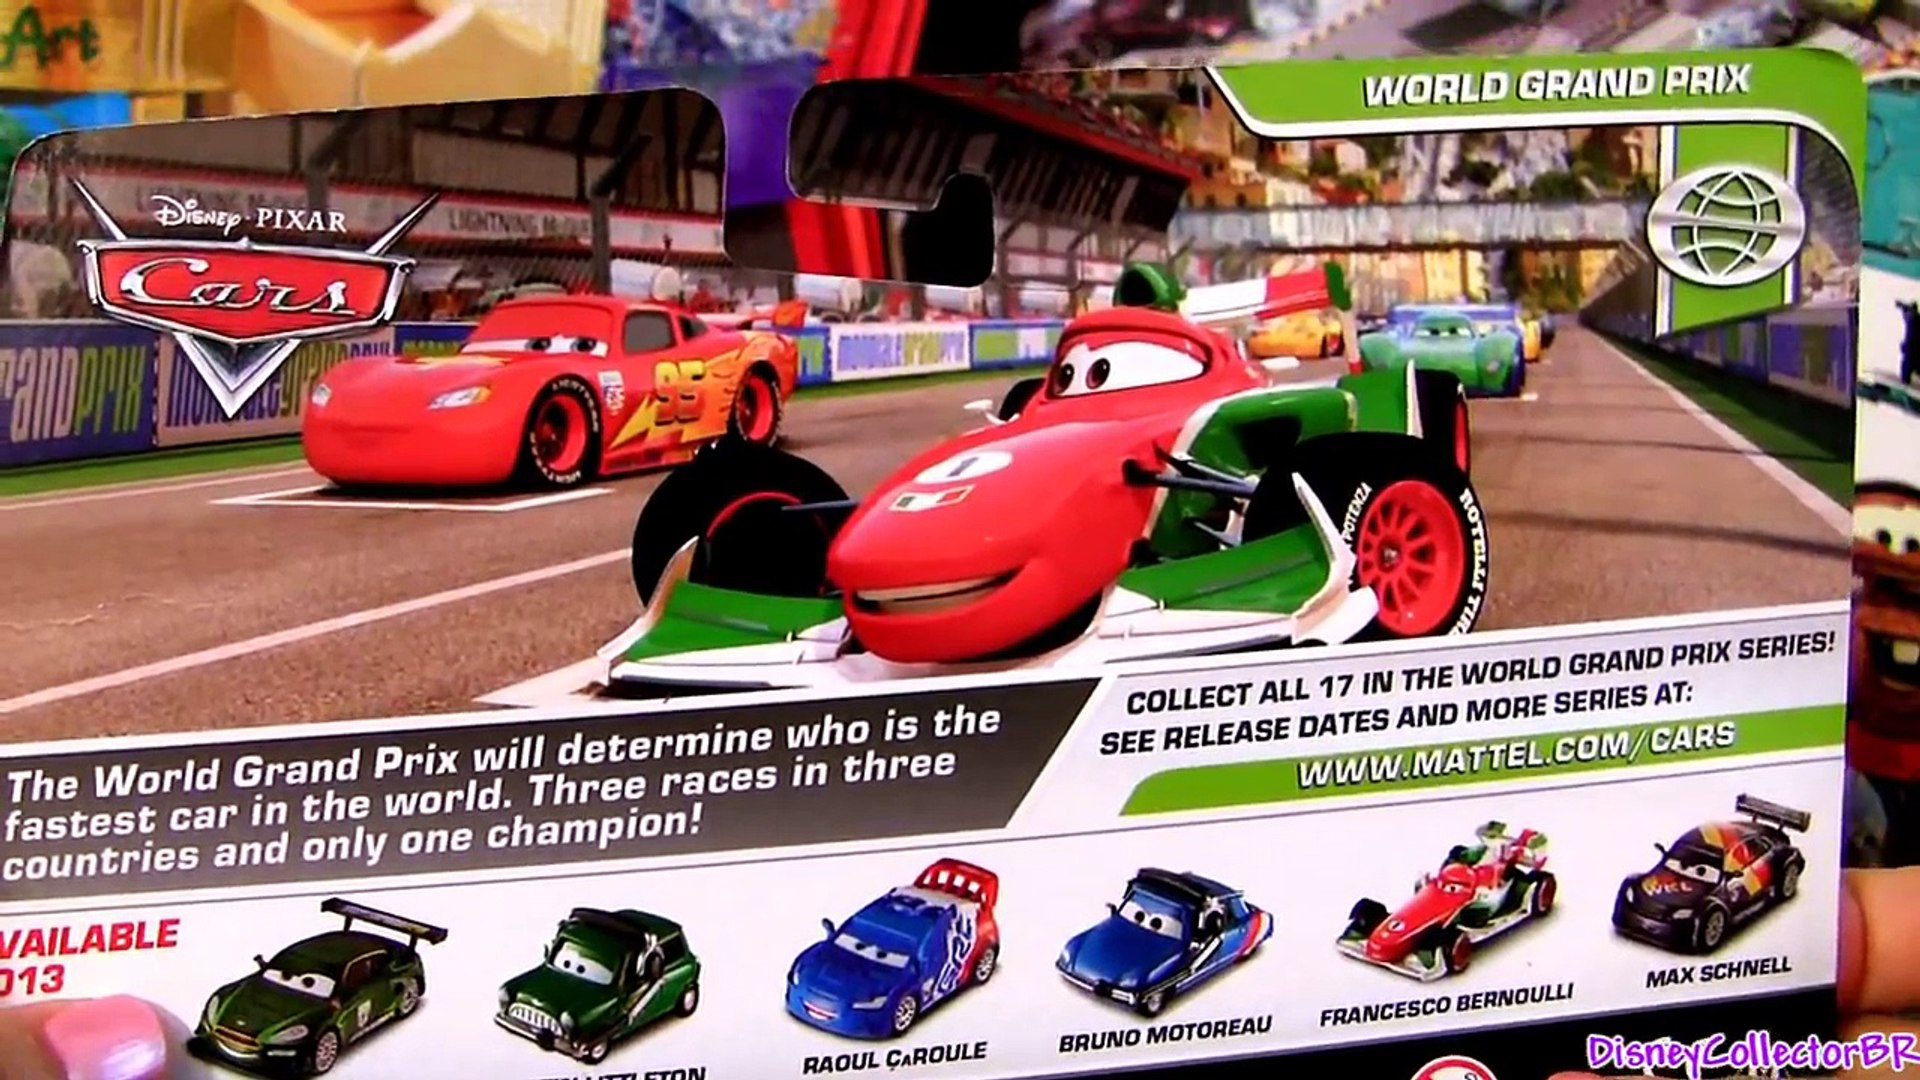 New Cars 2 Bruno Motoreau With Raoul Caroule Diecast World Grand Prix Mattel Disney Pixar Toys Video Dailymotion